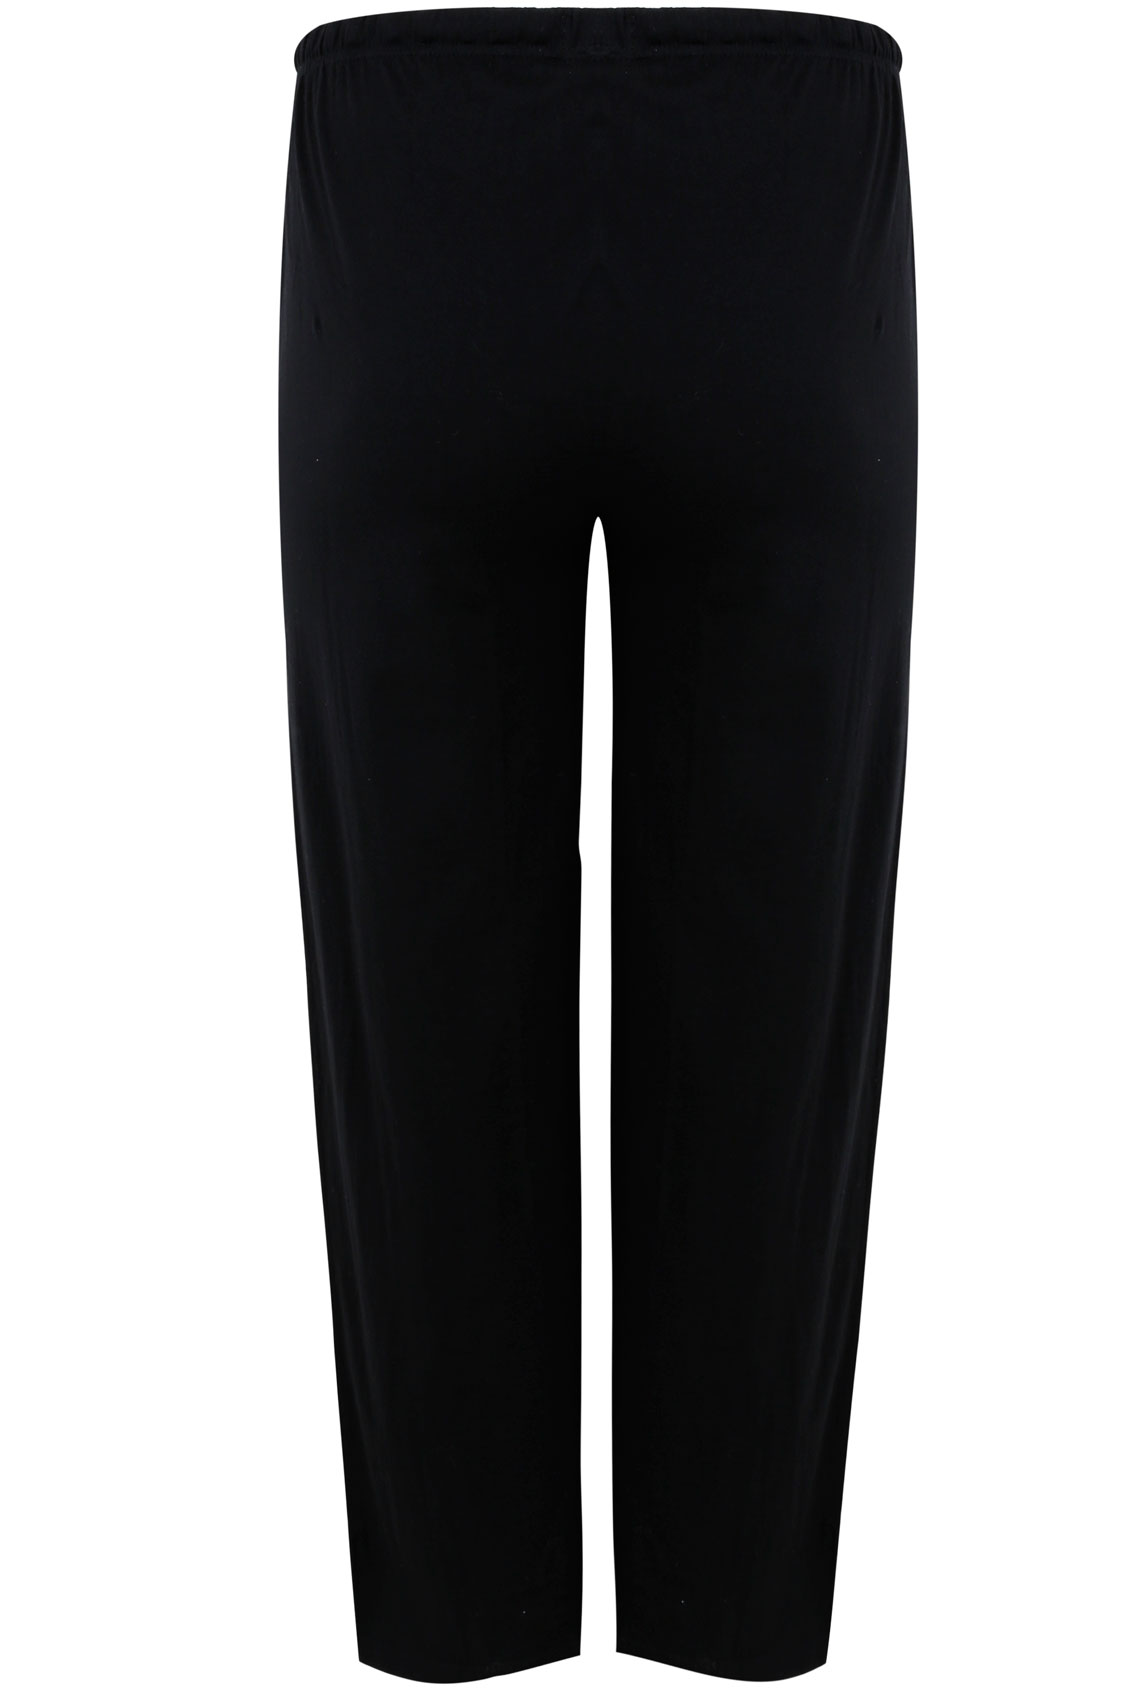 Black Basic Cotton Pyjama Trousers plus Size 16 to 32 | Yours Clothing